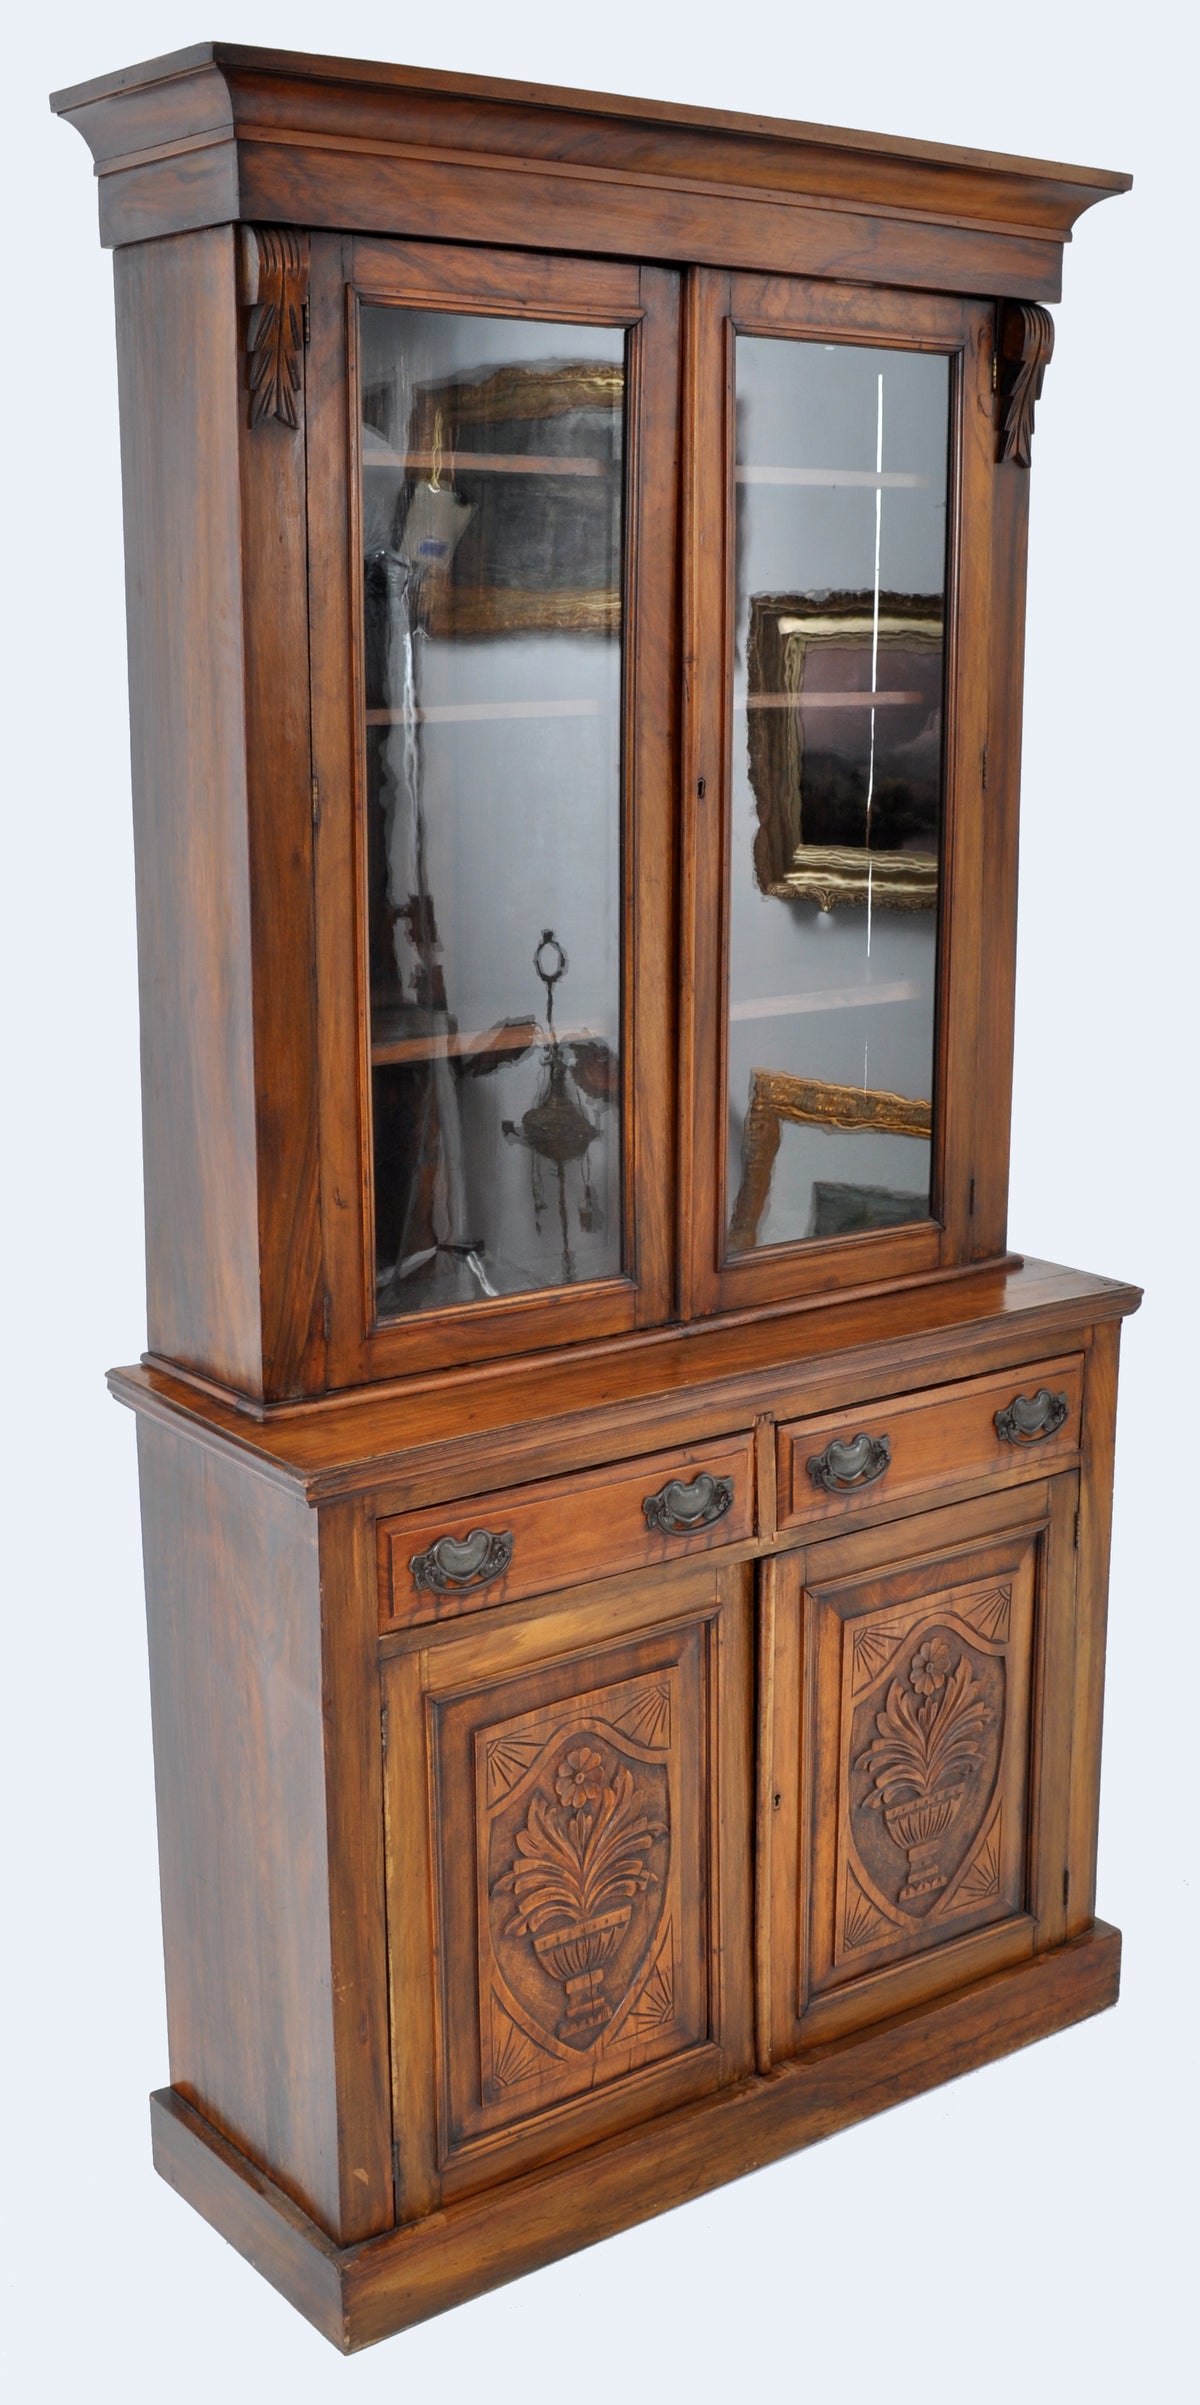 Antique English Aesthetic Movement Walnut Bookcase / Cabinet, circa 1880